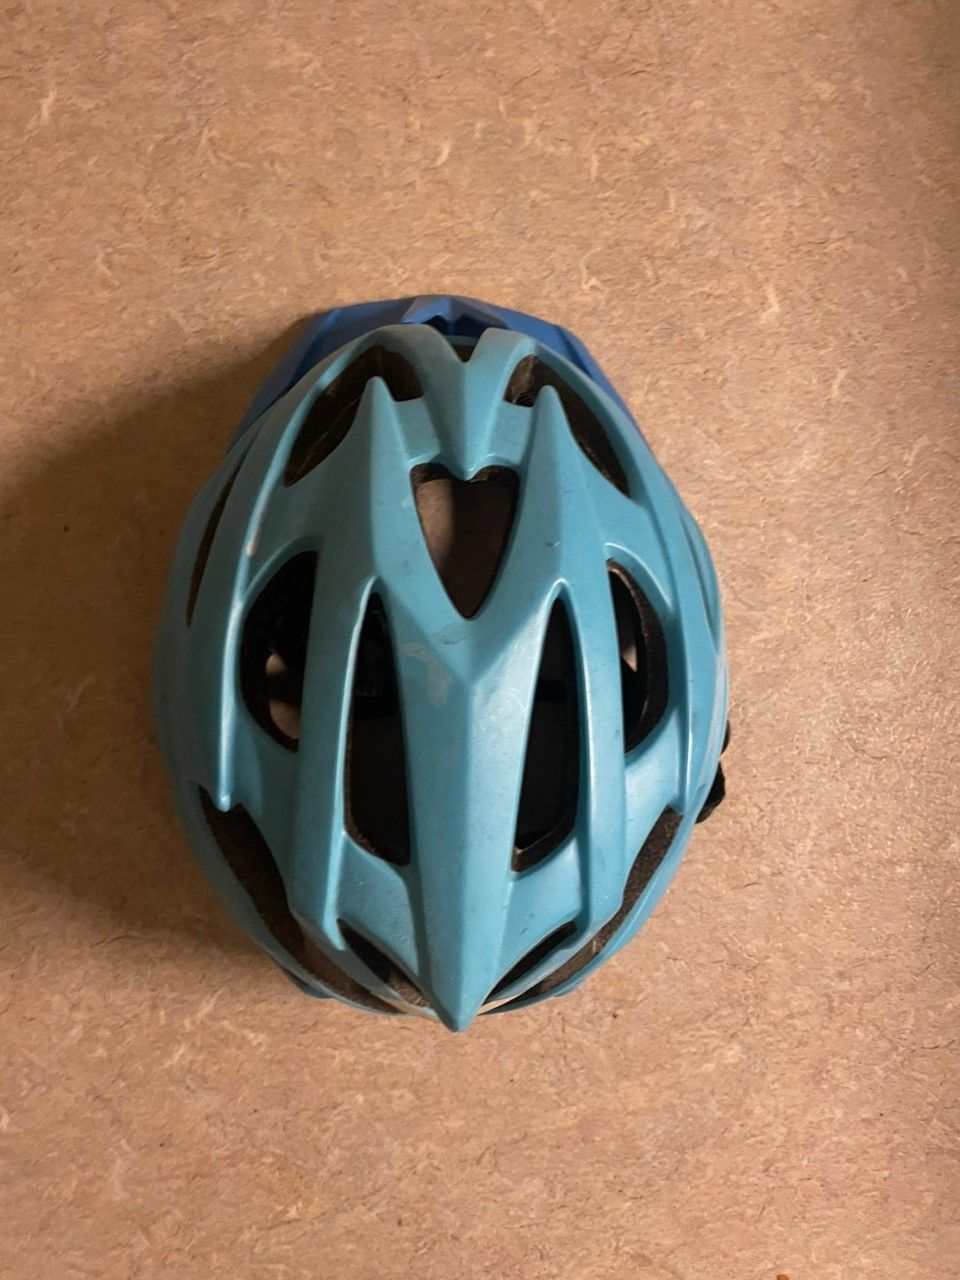 Light blue helmet